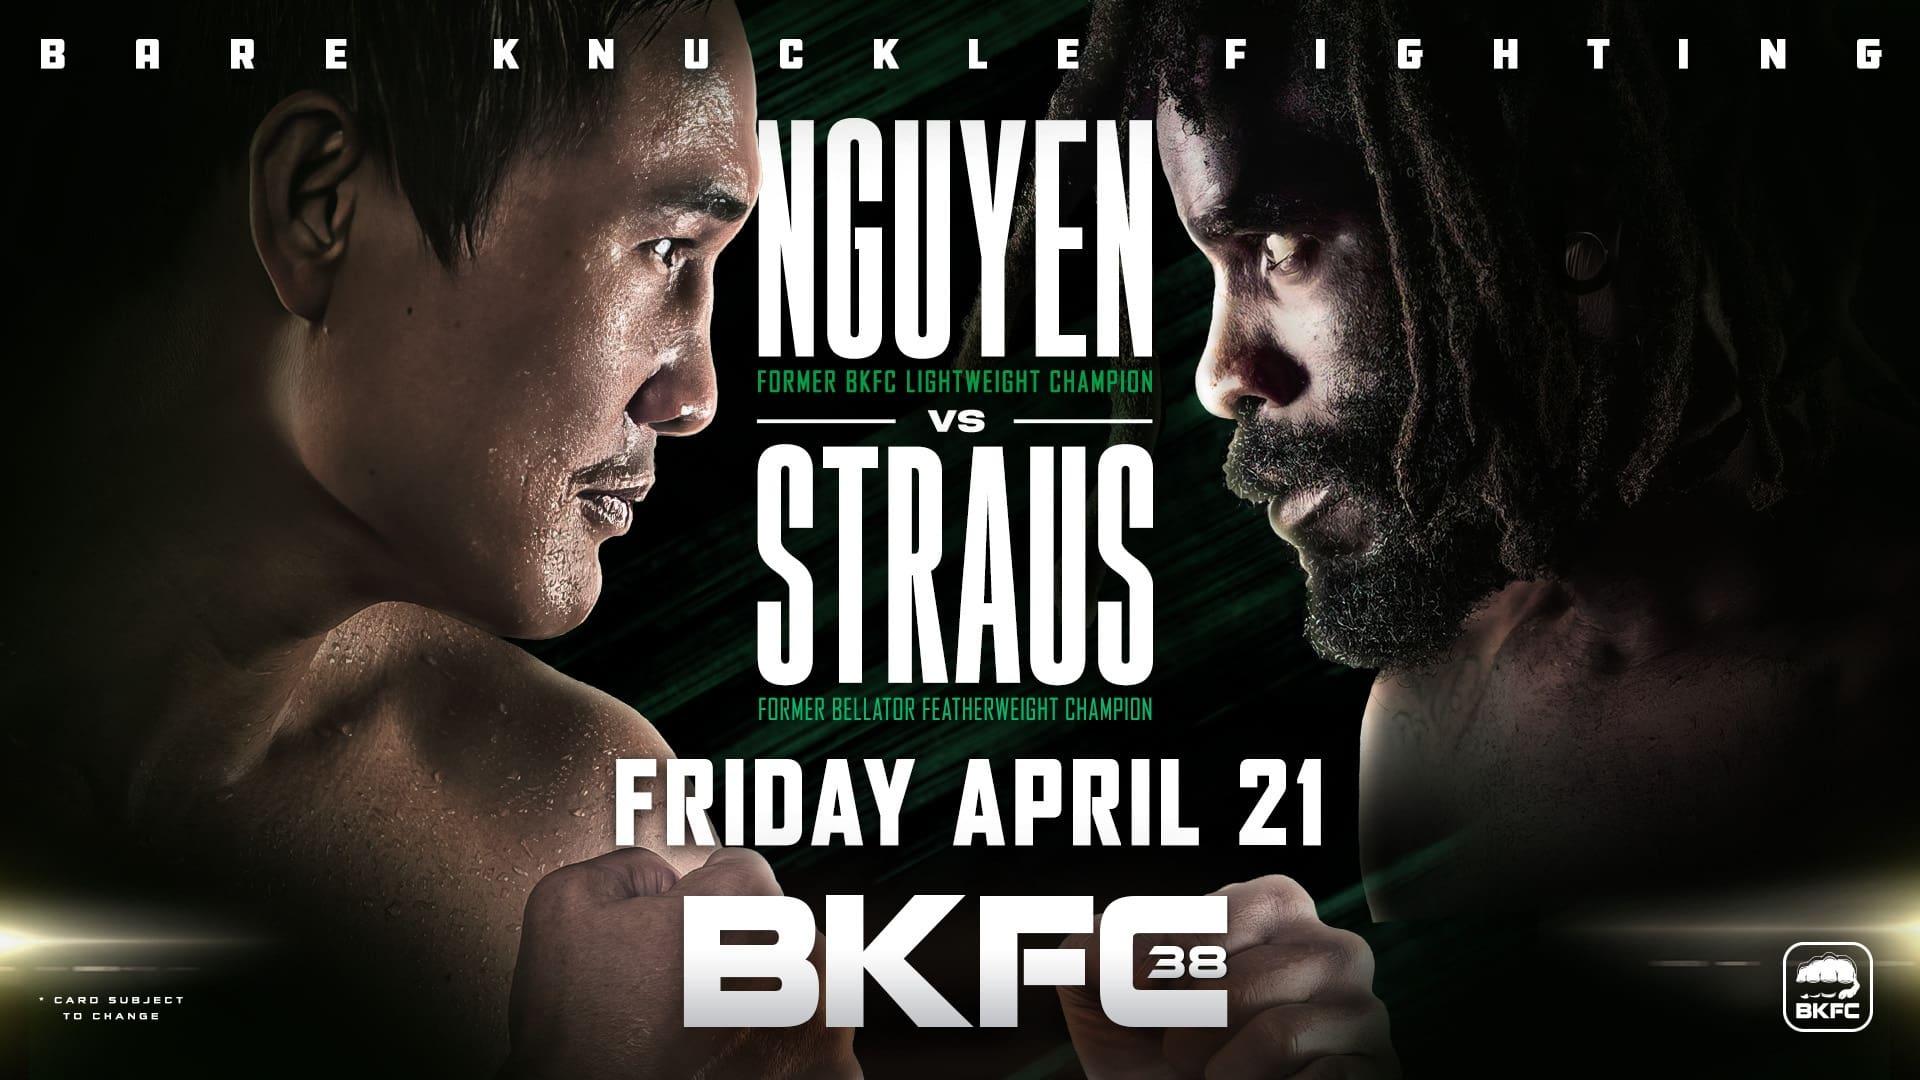 BKFC 38: Nguyen vs. Straus backdrop